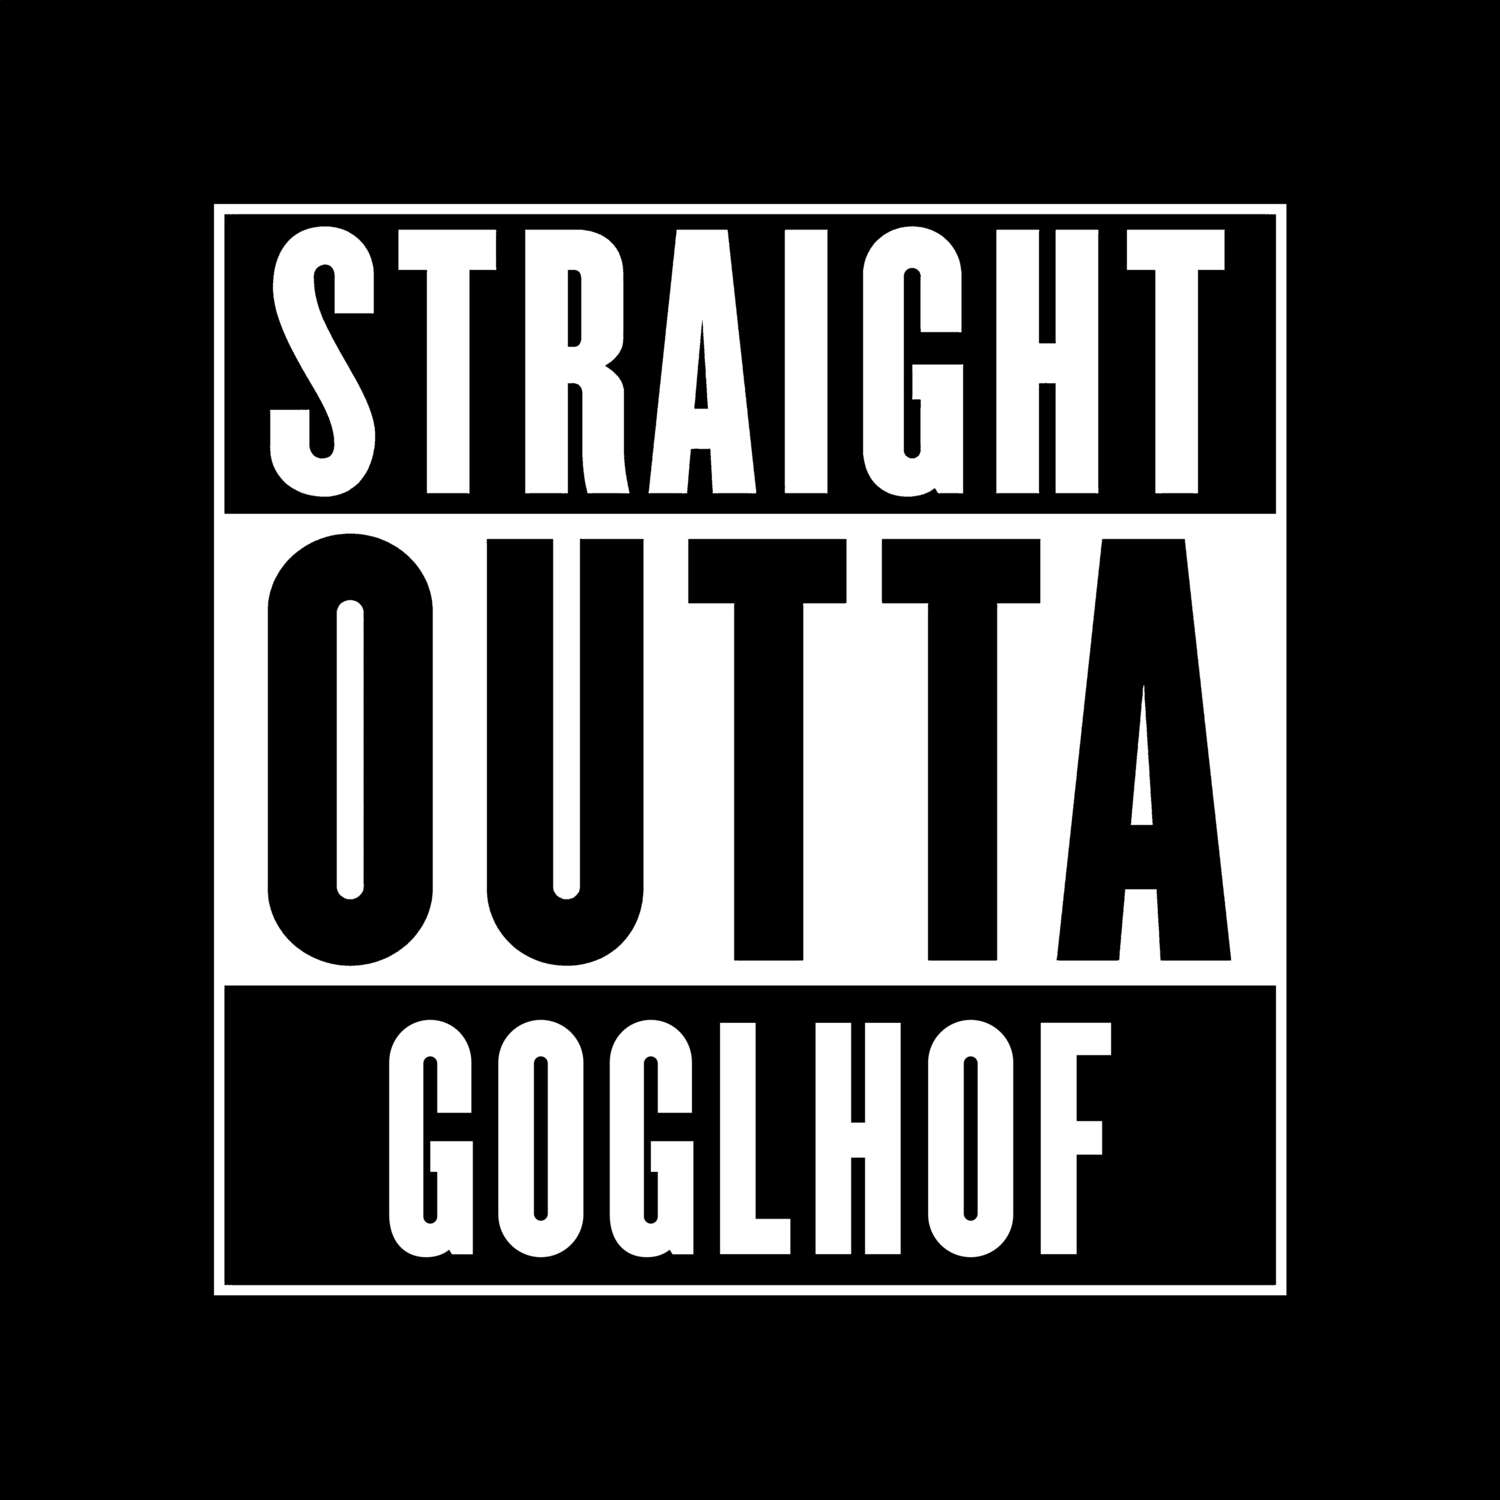 Goglhof T-Shirt »Straight Outta«